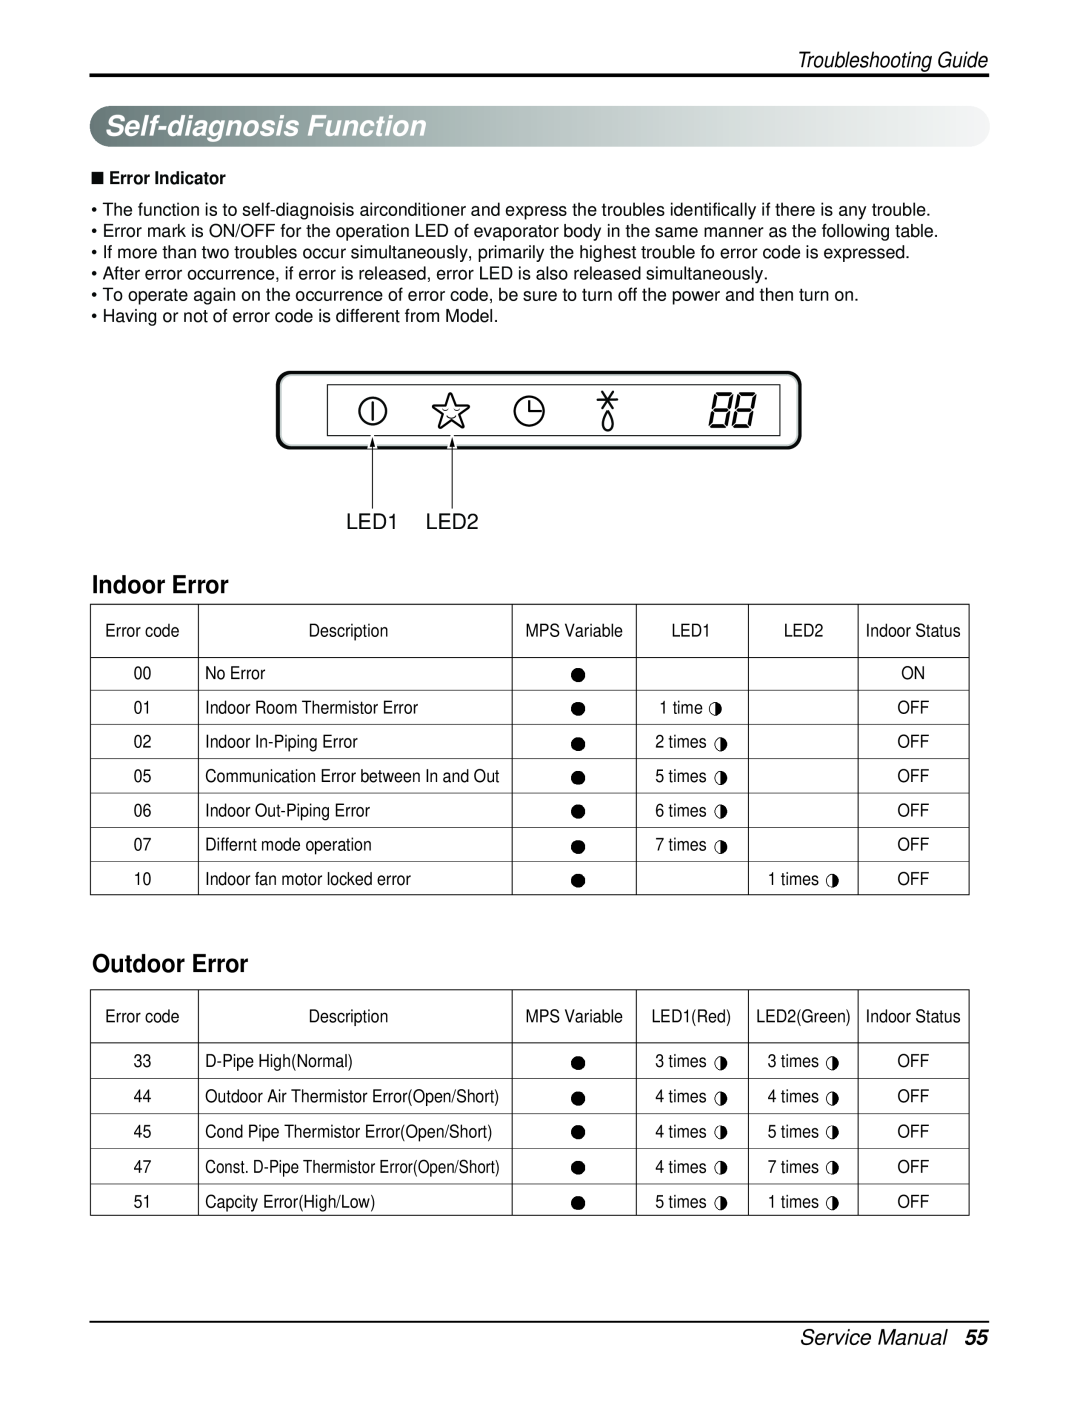 Heat Controller DMH18DB-1 manual Self-diagnosisFunction, Indoor Error, Outdoor Error, Troubleshooting Guide, Service Manual 